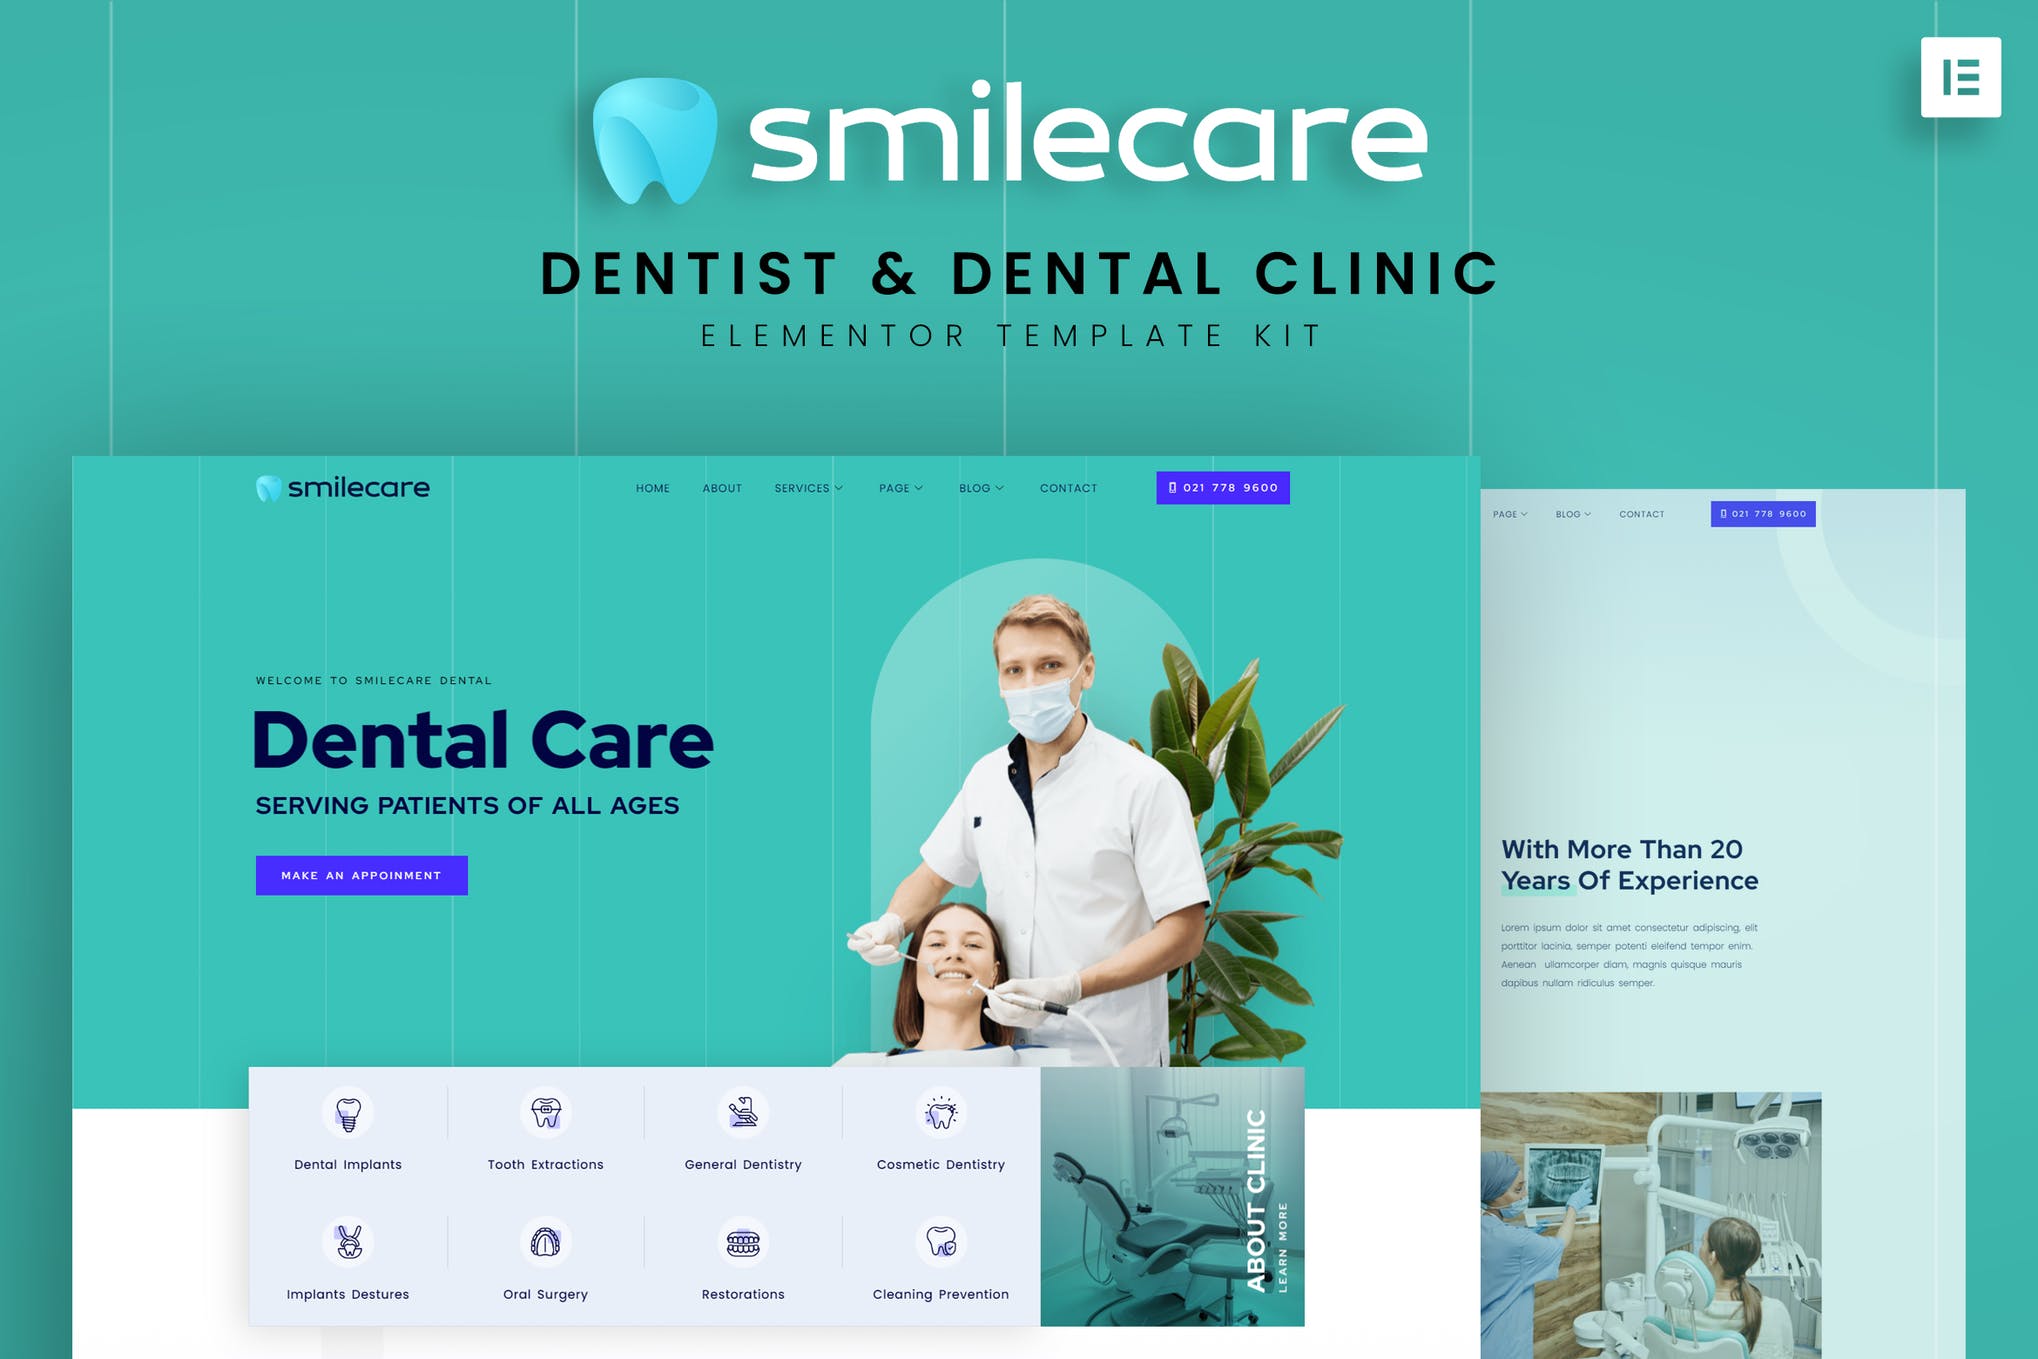 Smilecare - Dentist & Dental Clinic Elementor Template Kit